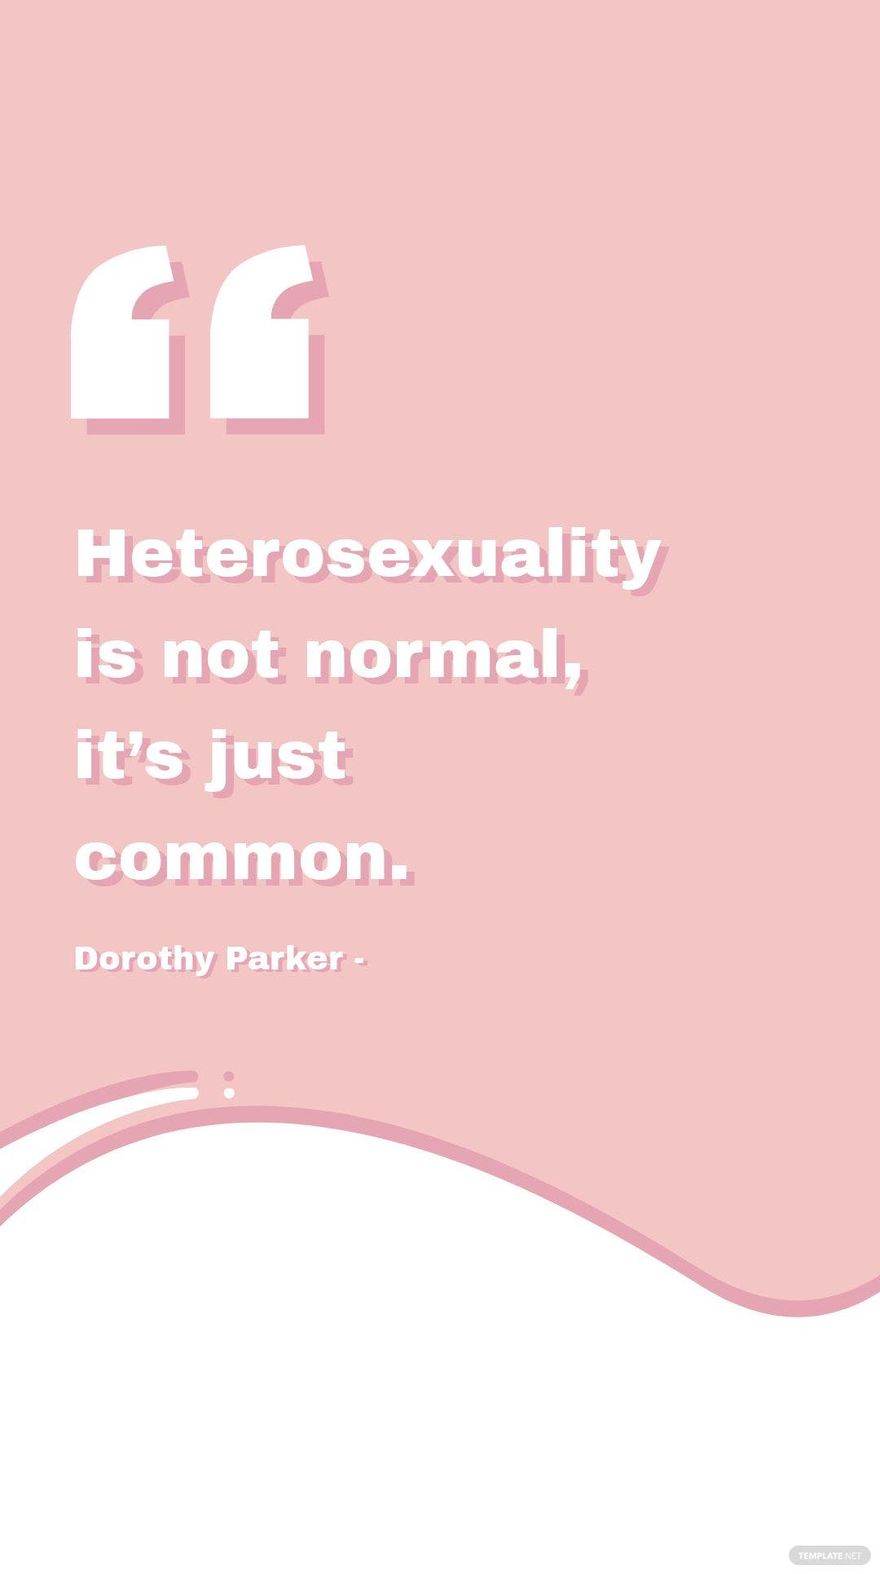 Dorothy Parker - Heterosexuality is not normal, it’s just common.